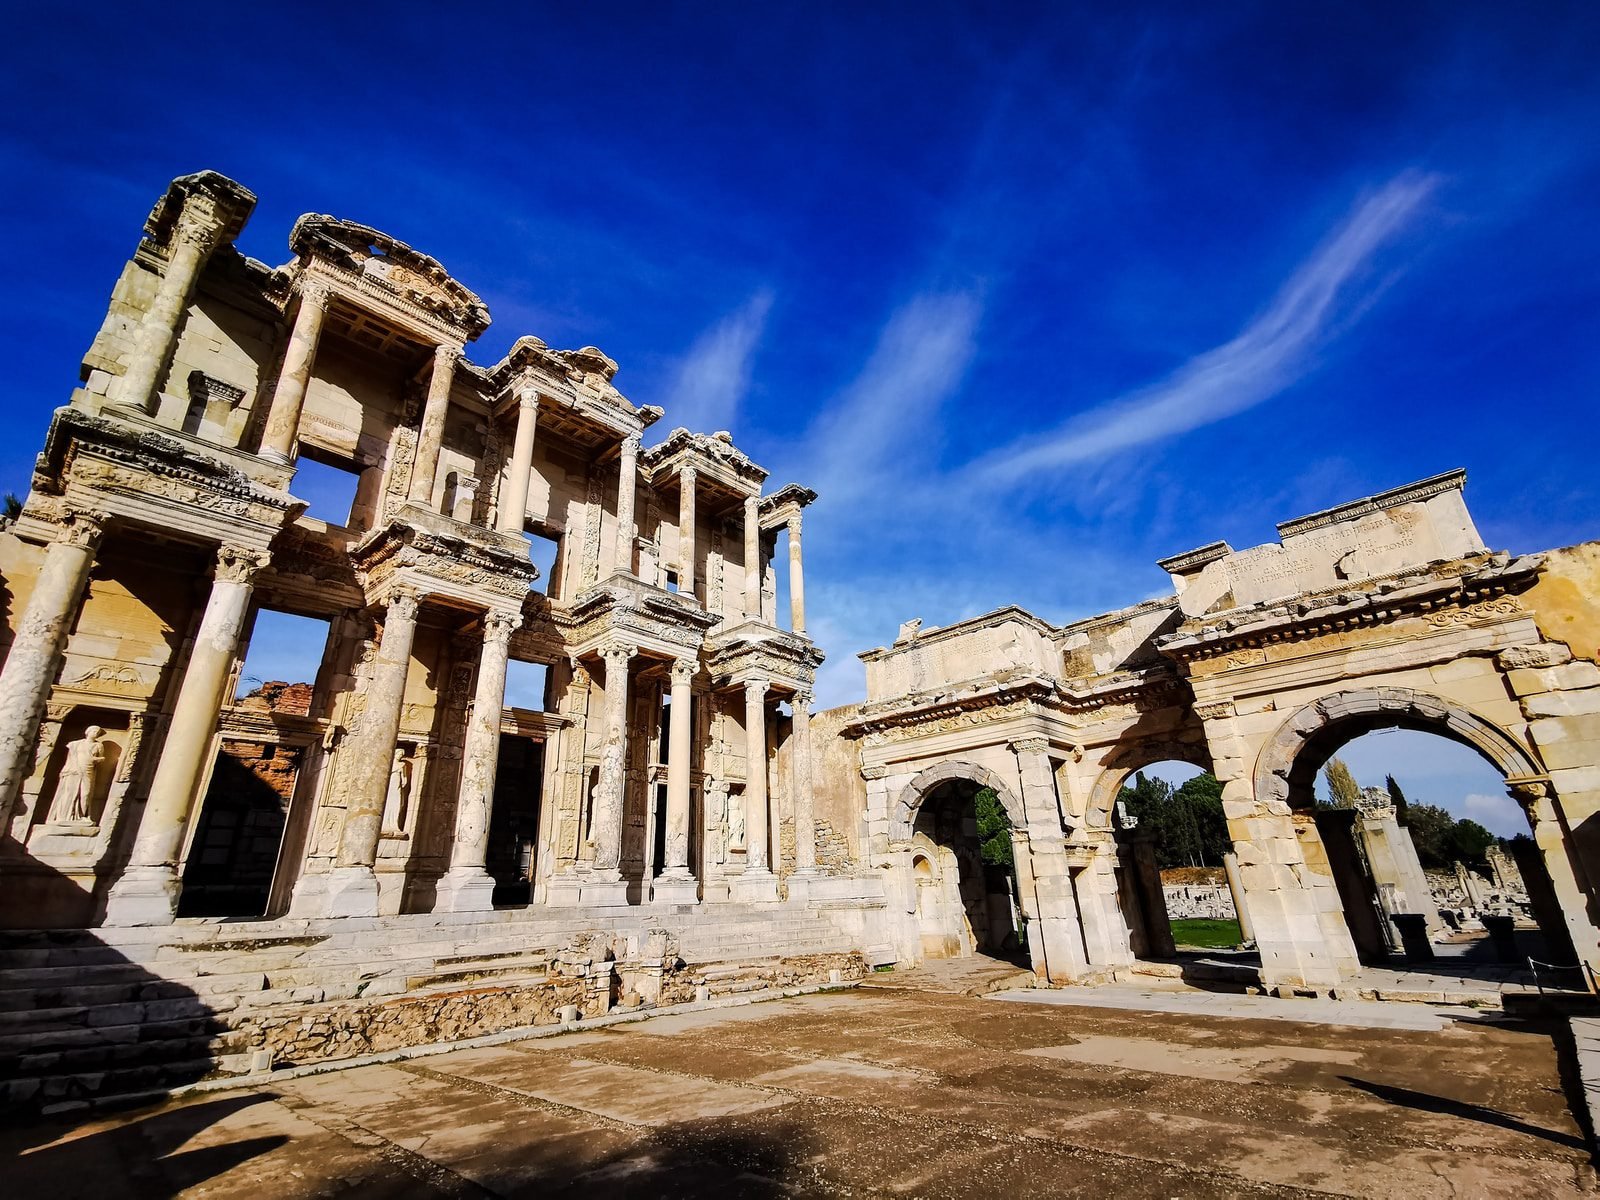 Ephesus - brown concrete building under blue sky during daytime